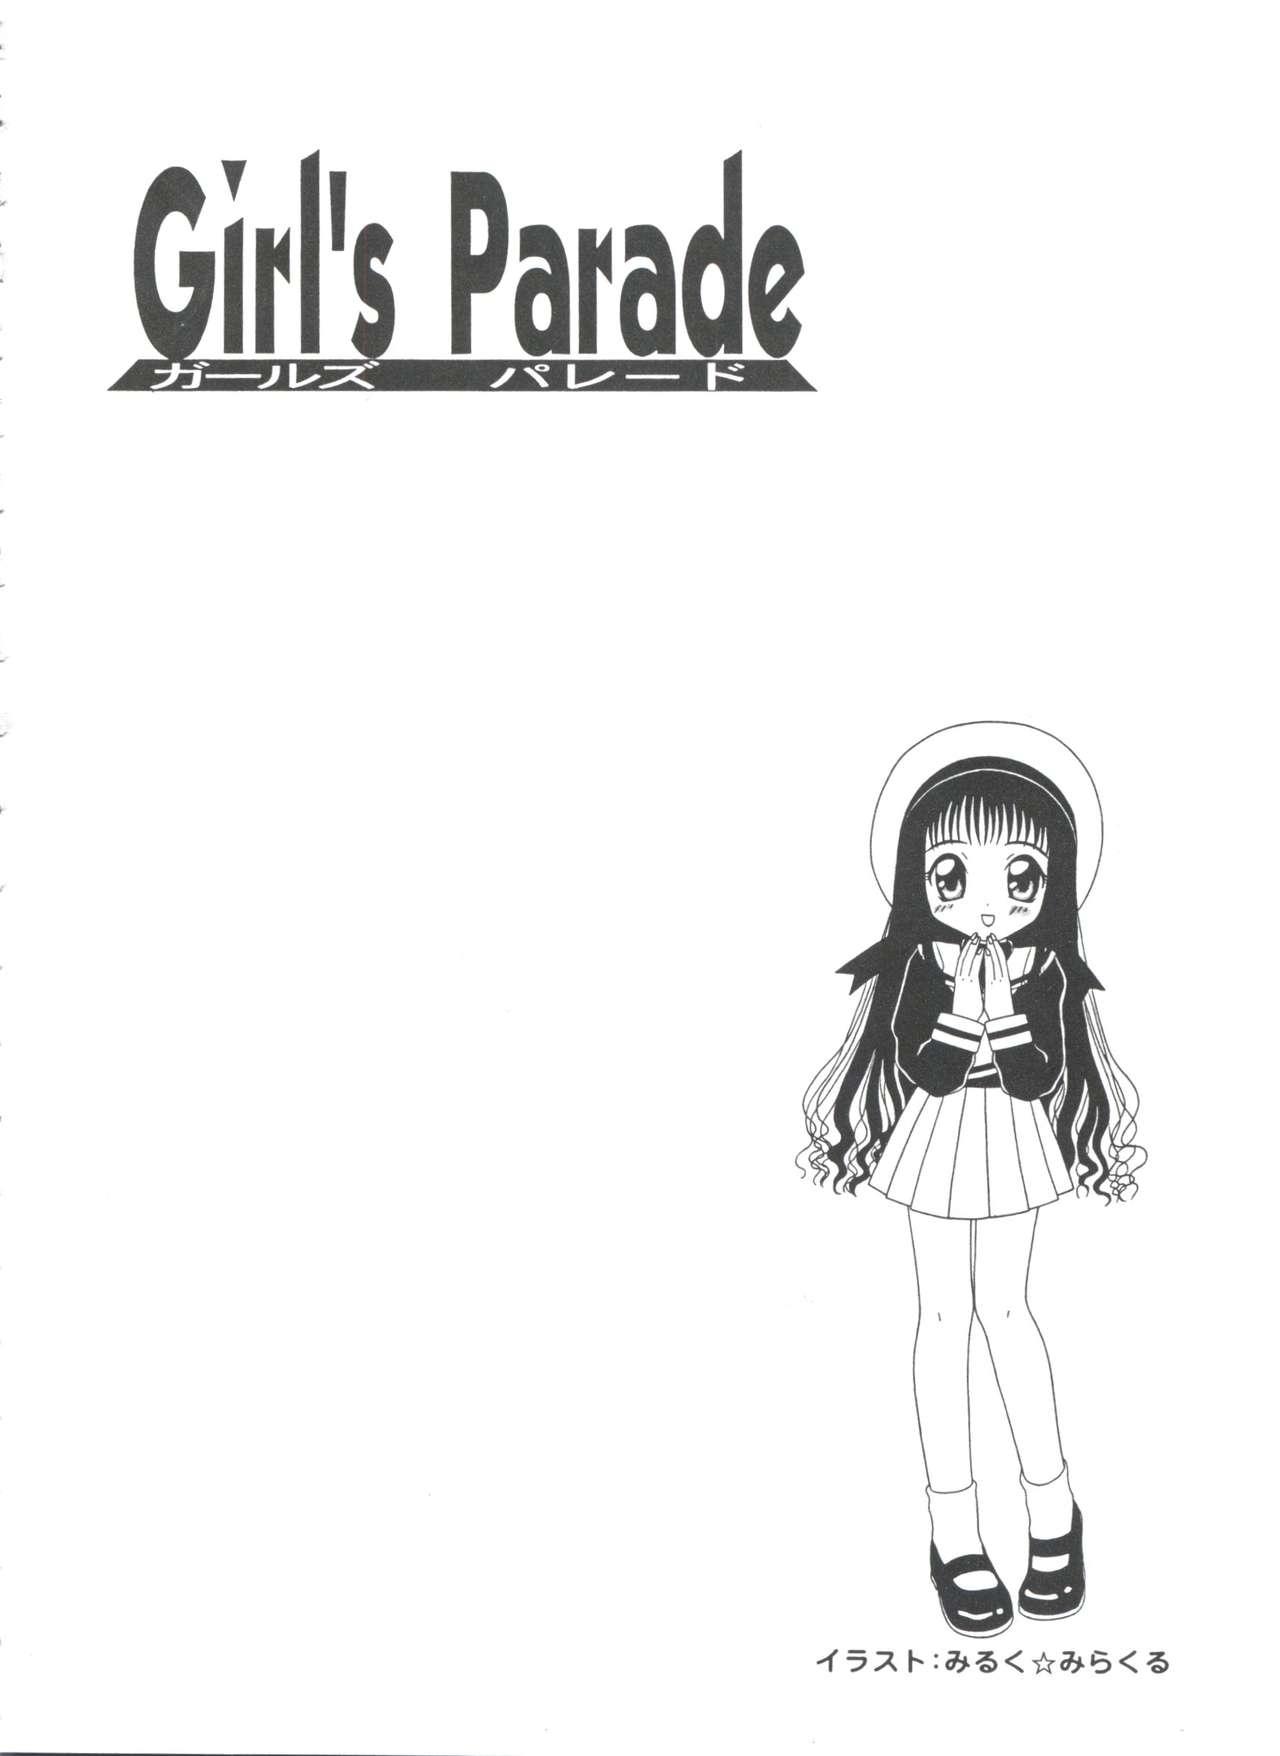 Girl's Parade 99 Cut 1 146